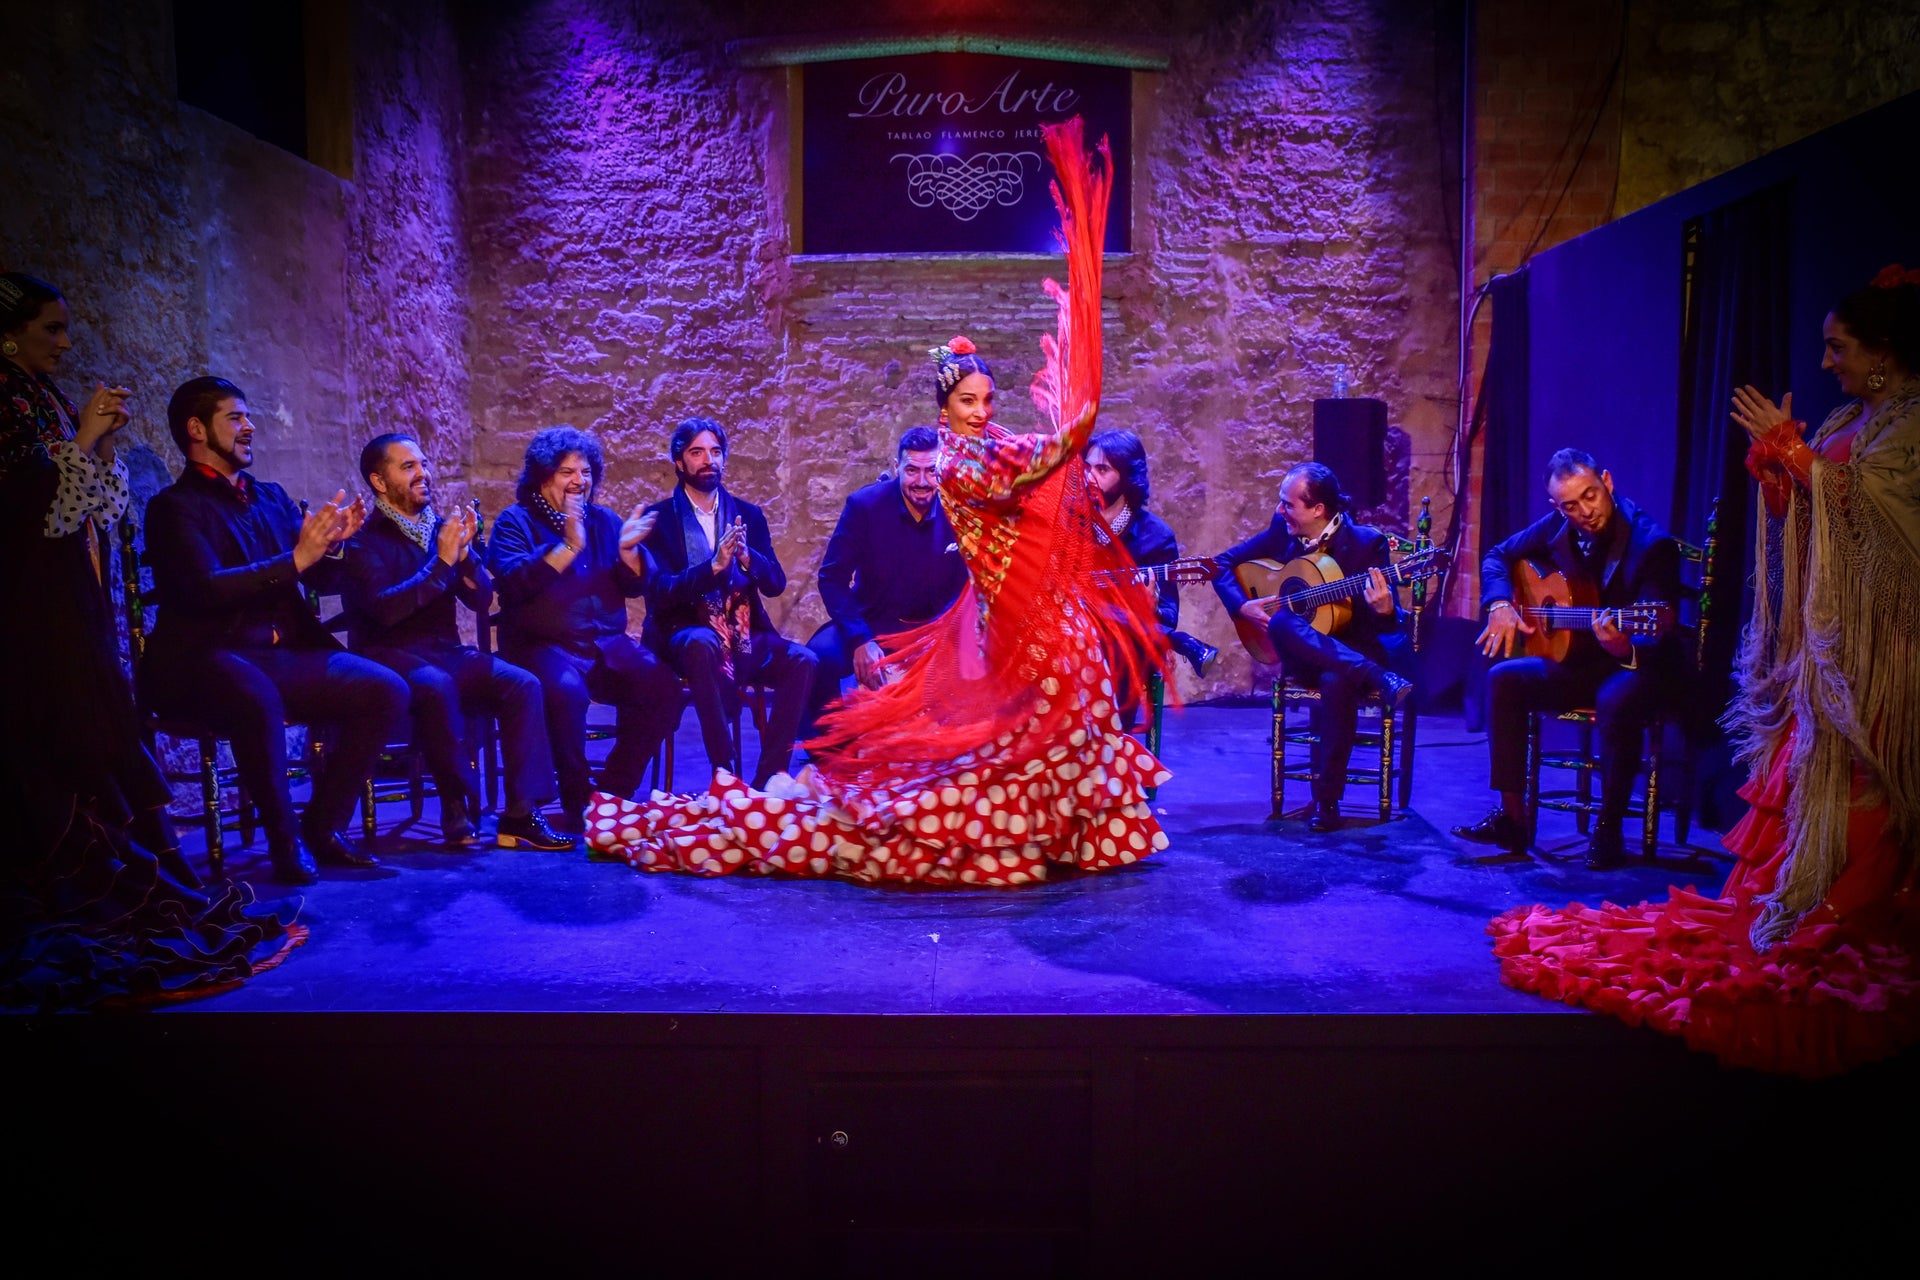 Flamenco Show at Tablao Puro Arte